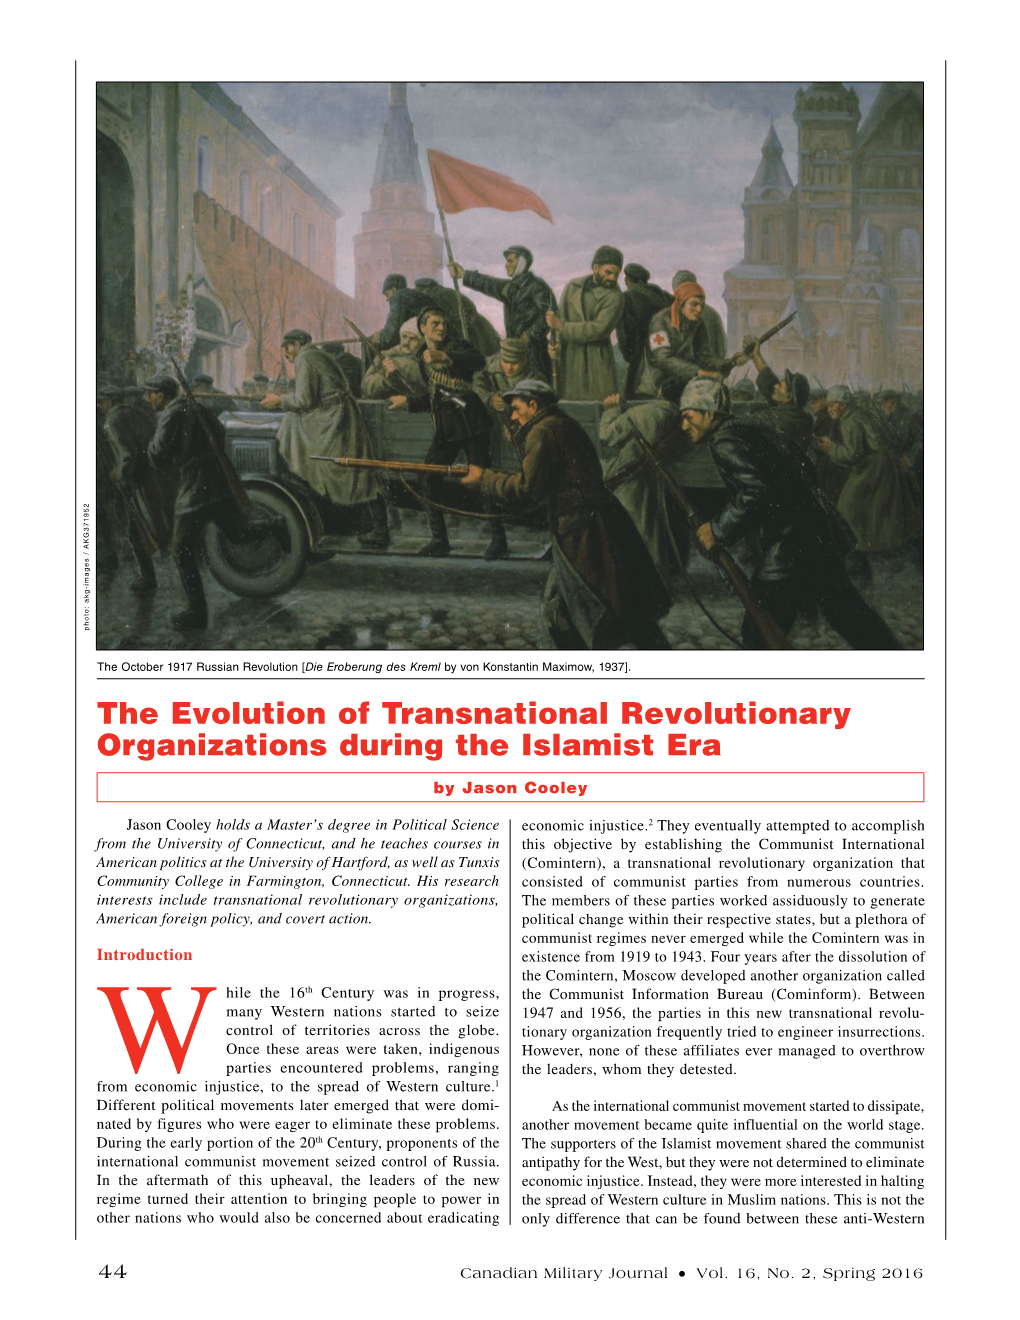 The Evolution of Transnational Revolutionary Organizations During the Islamist Era